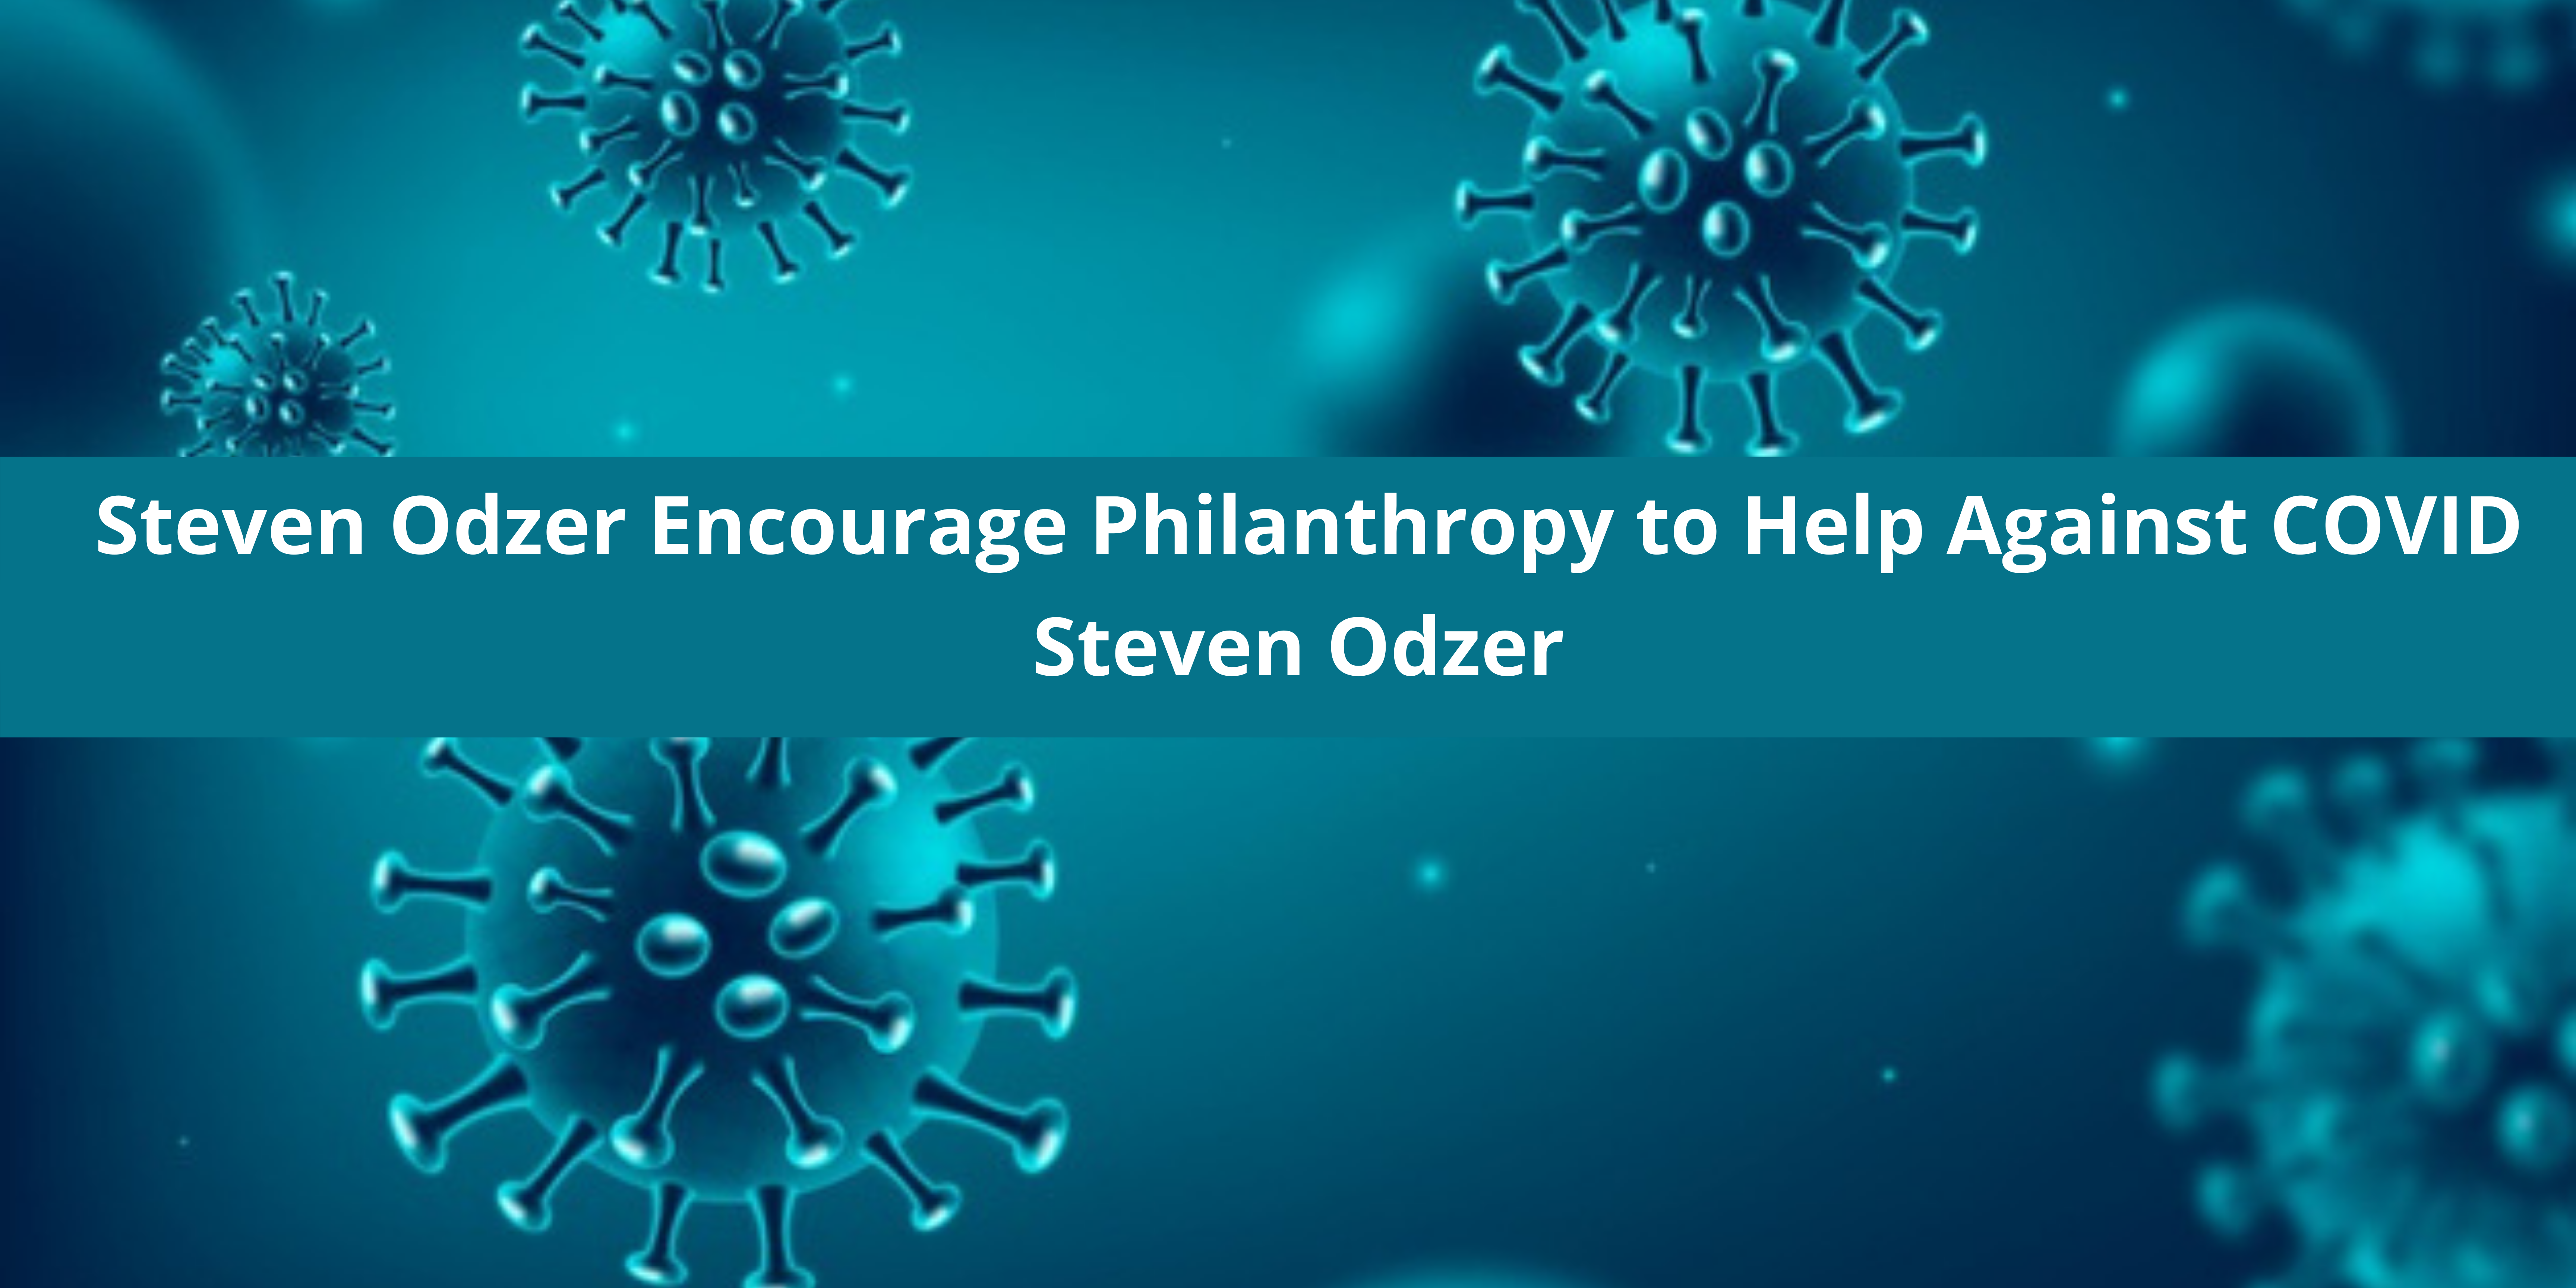 Steven Odzer Encourage Philanthropy to Help Against COVID